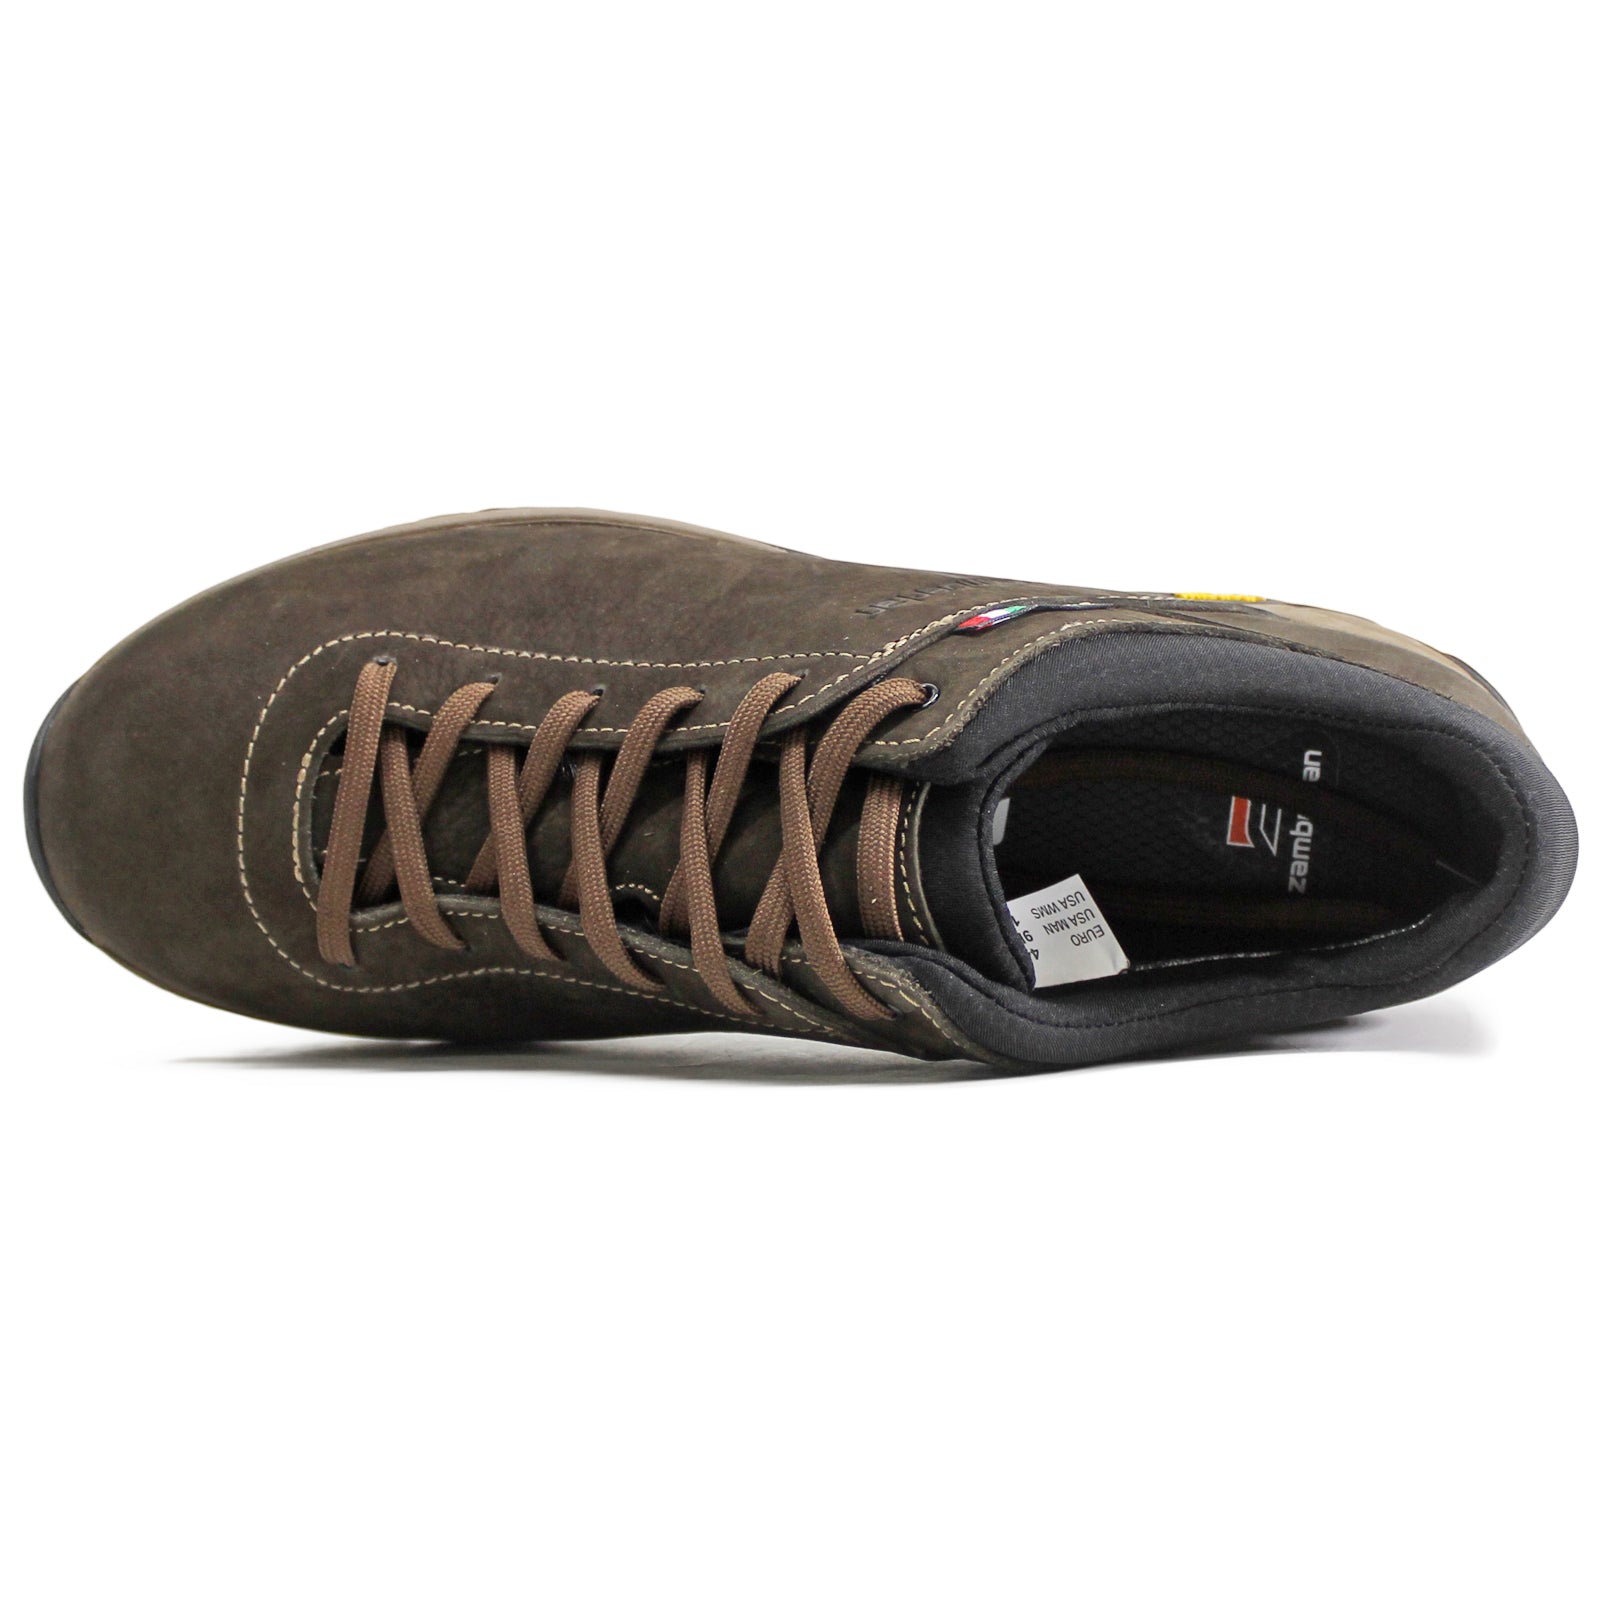 Zamberlan 1320 Commute GTX Nubuck Leather Mens Boots#color_dark brown